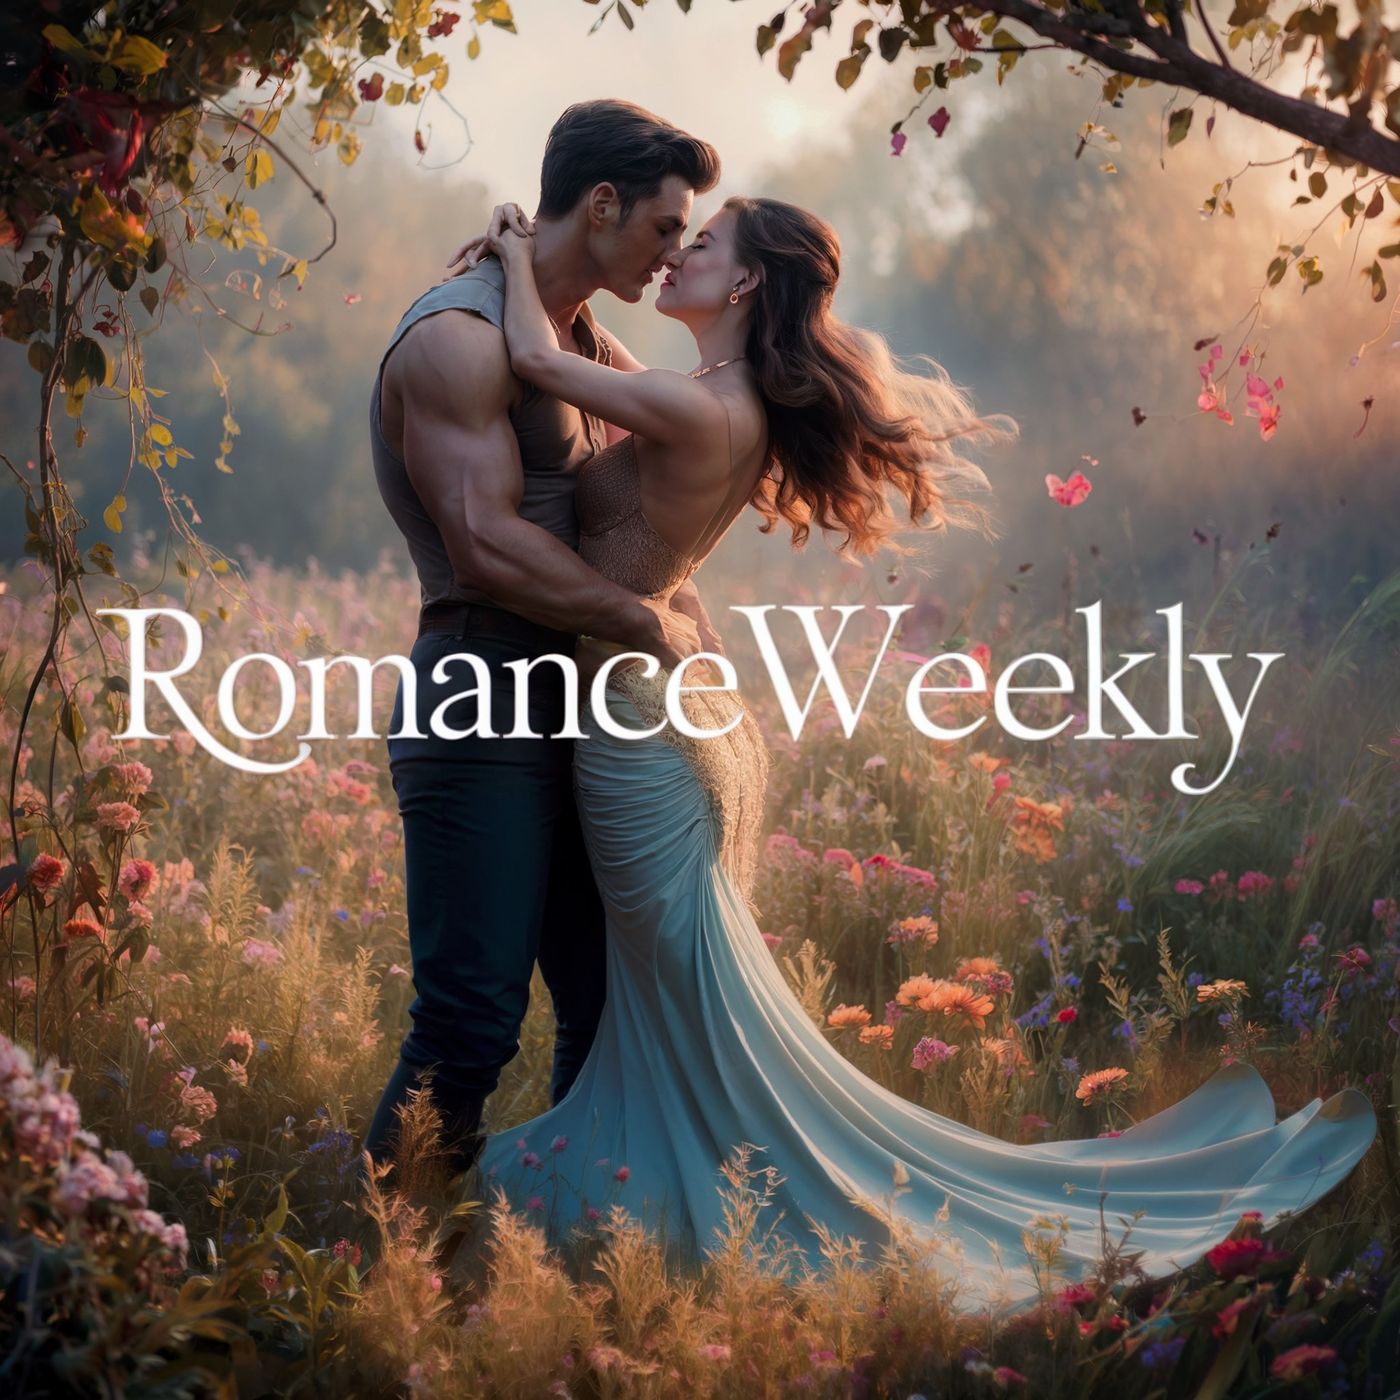 Romance Weekly (Season 2) - Coming July 25th!